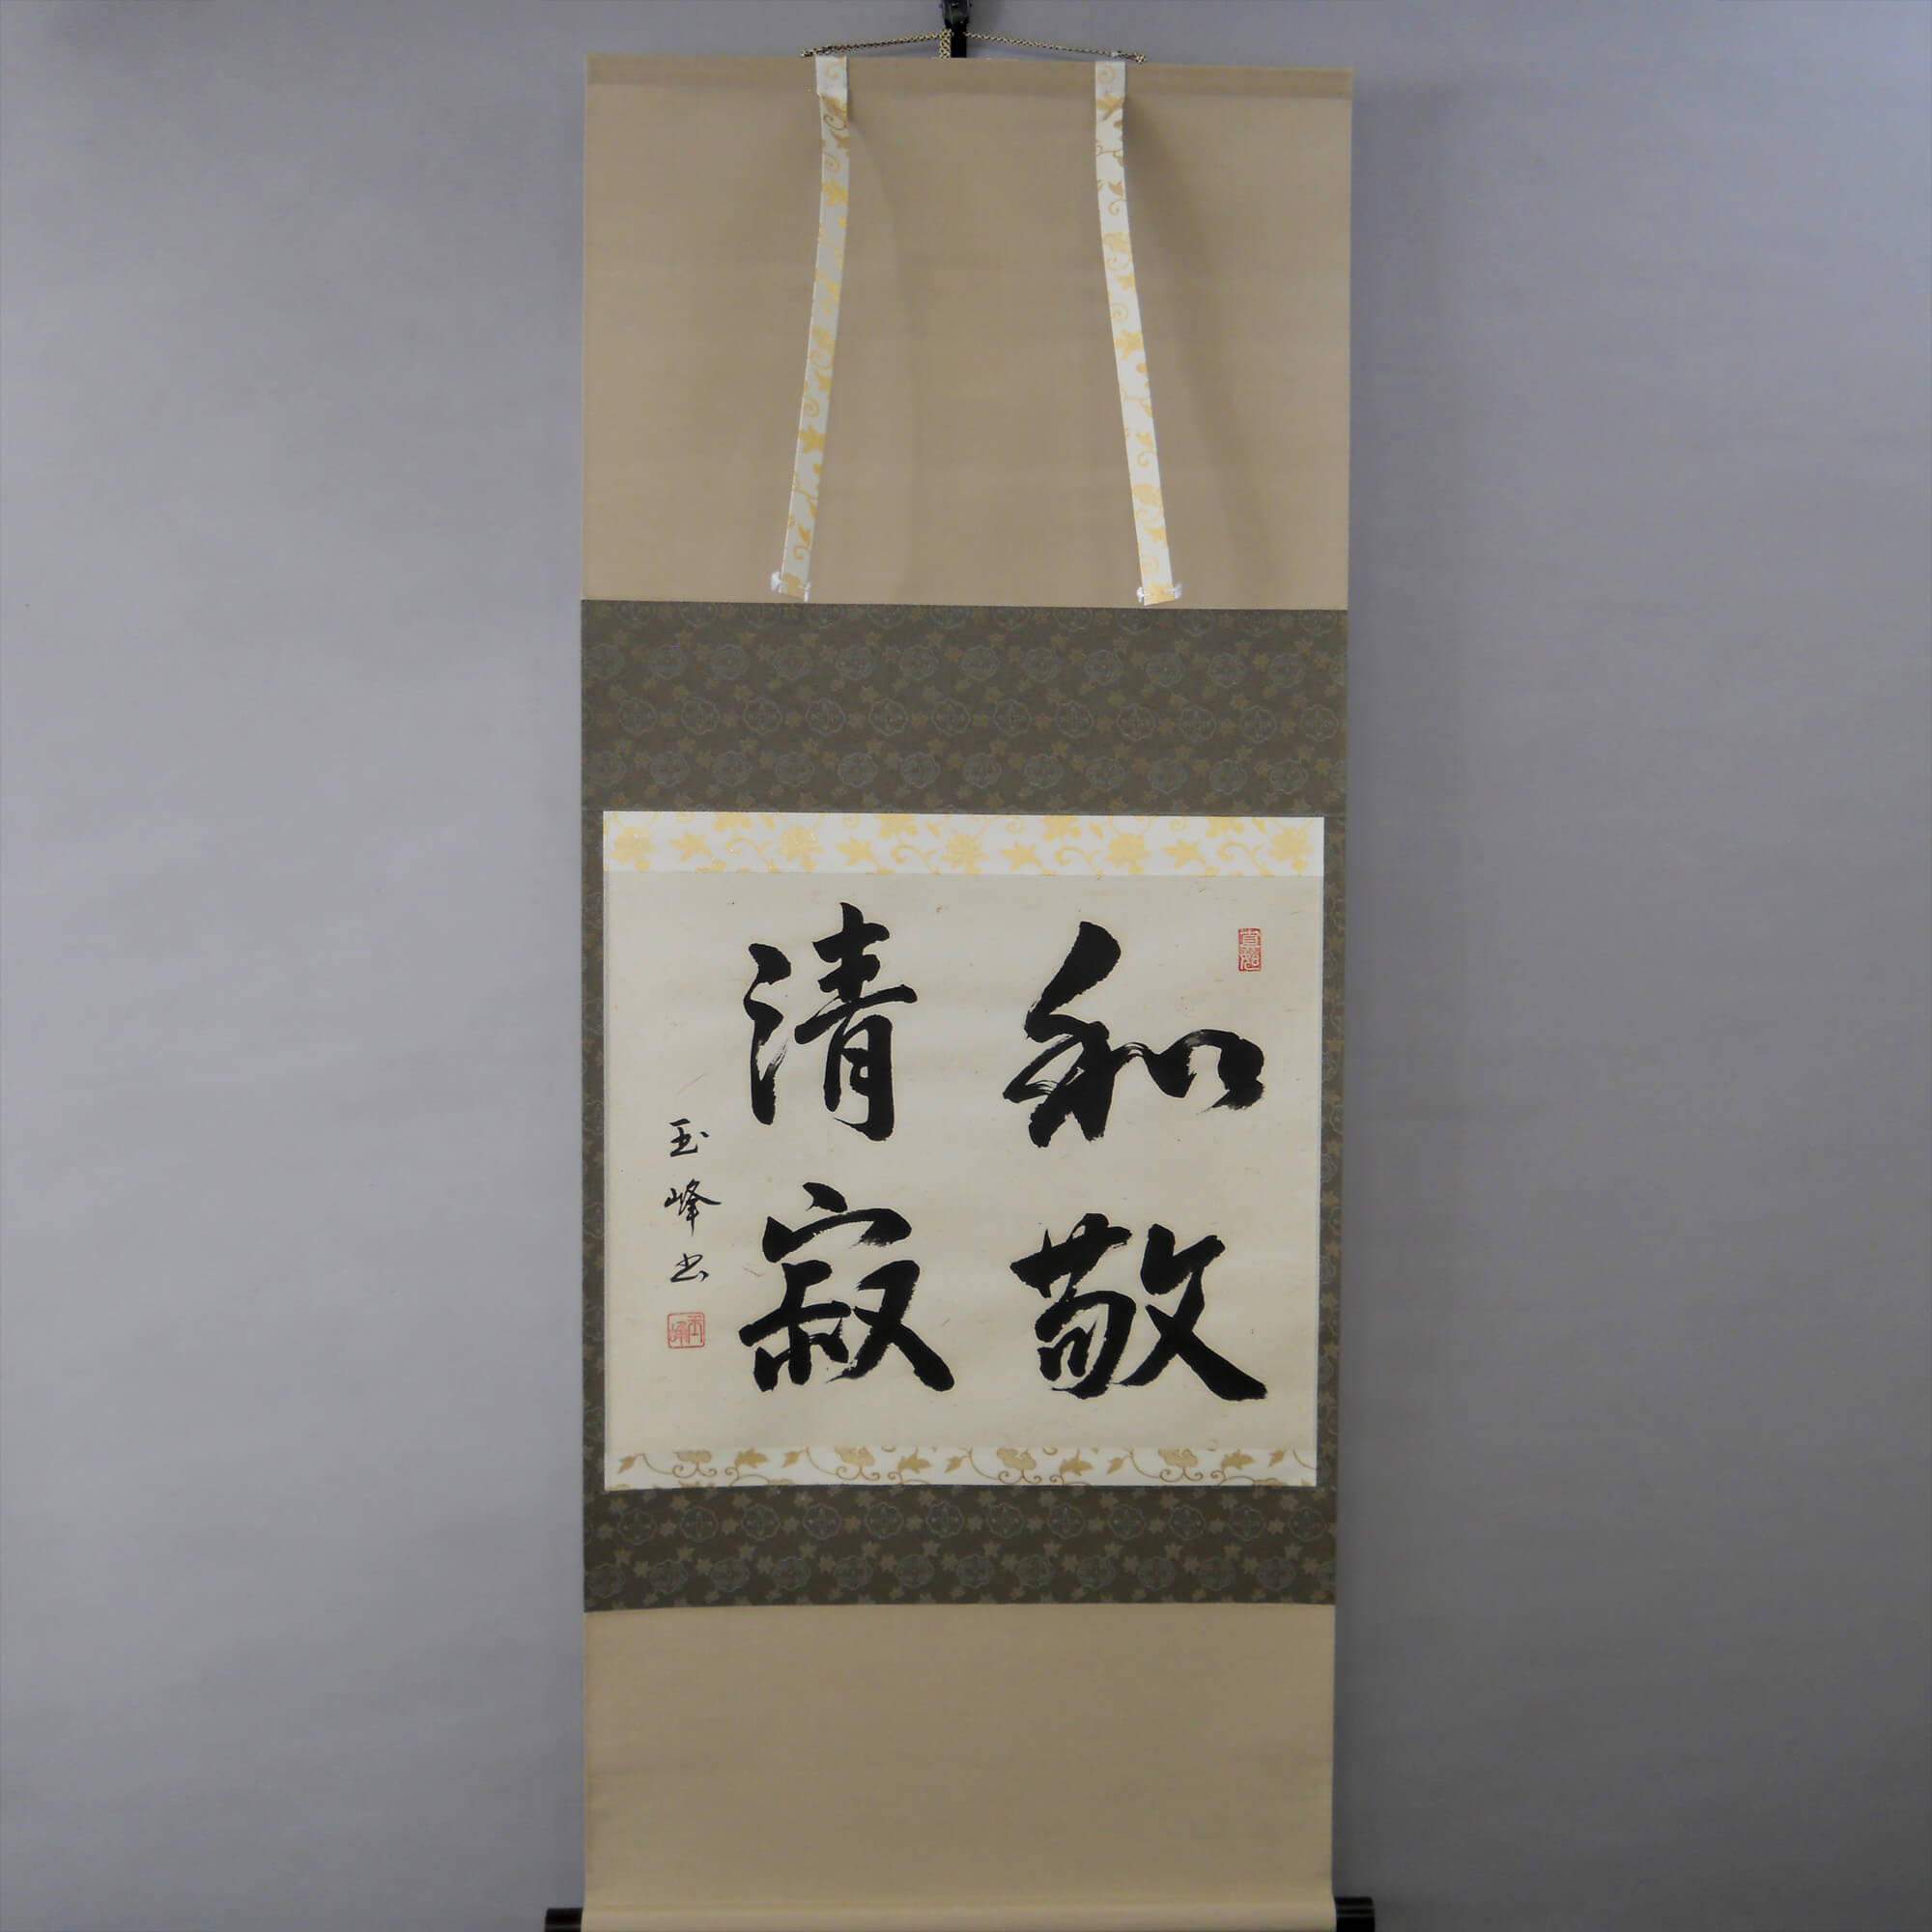 Calligraphy: Harmony, Respect, Purity and Tranquility / Ueda Gyokuhō